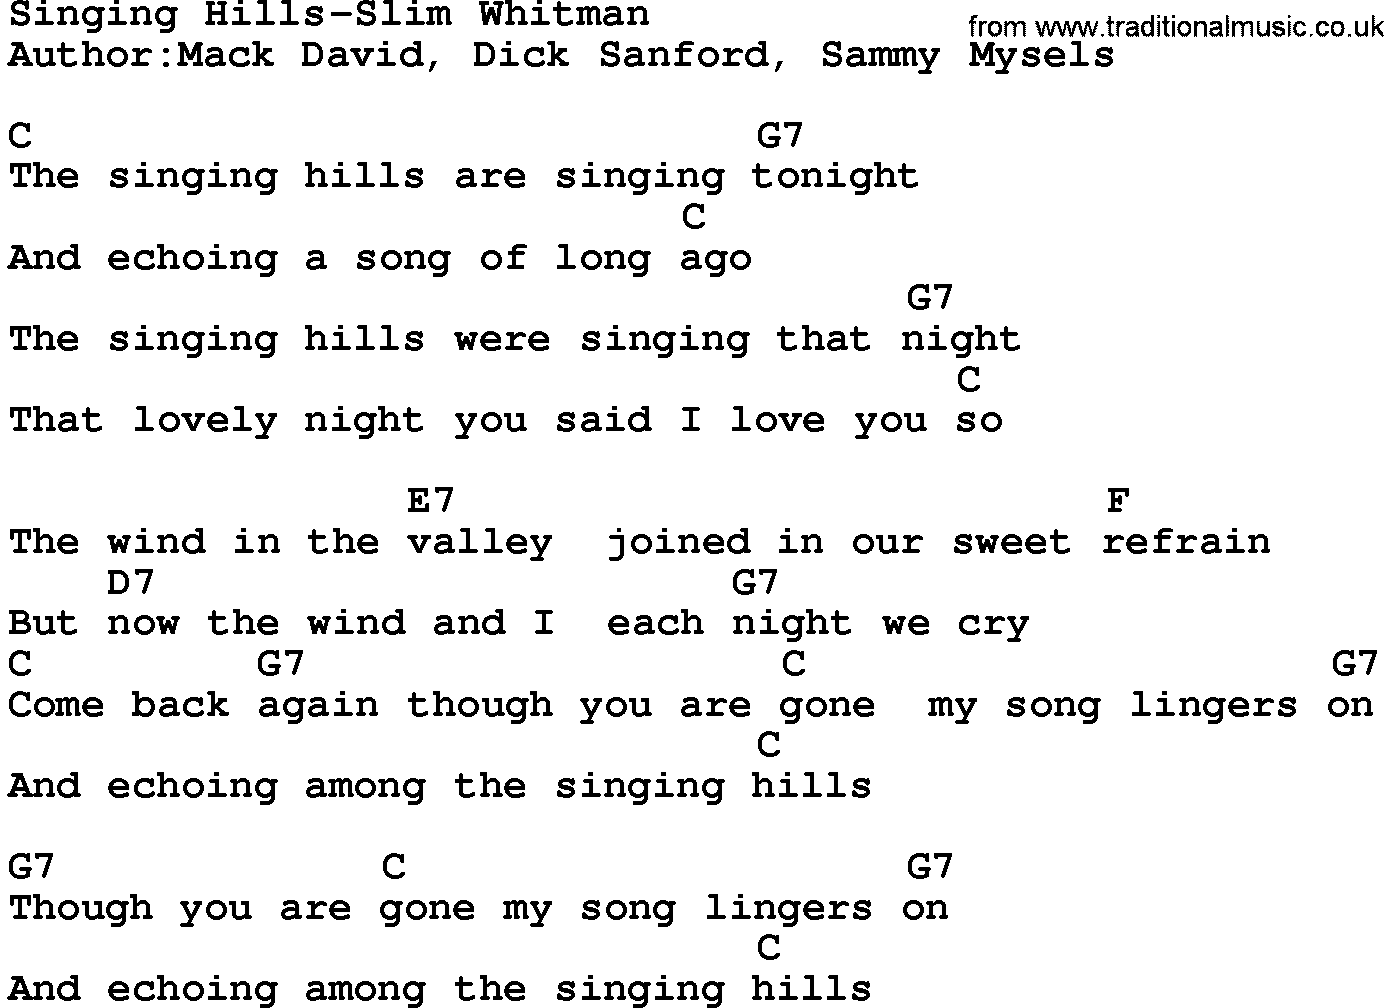 Country music song: Singing Hills-Slim Whitman lyrics and chords